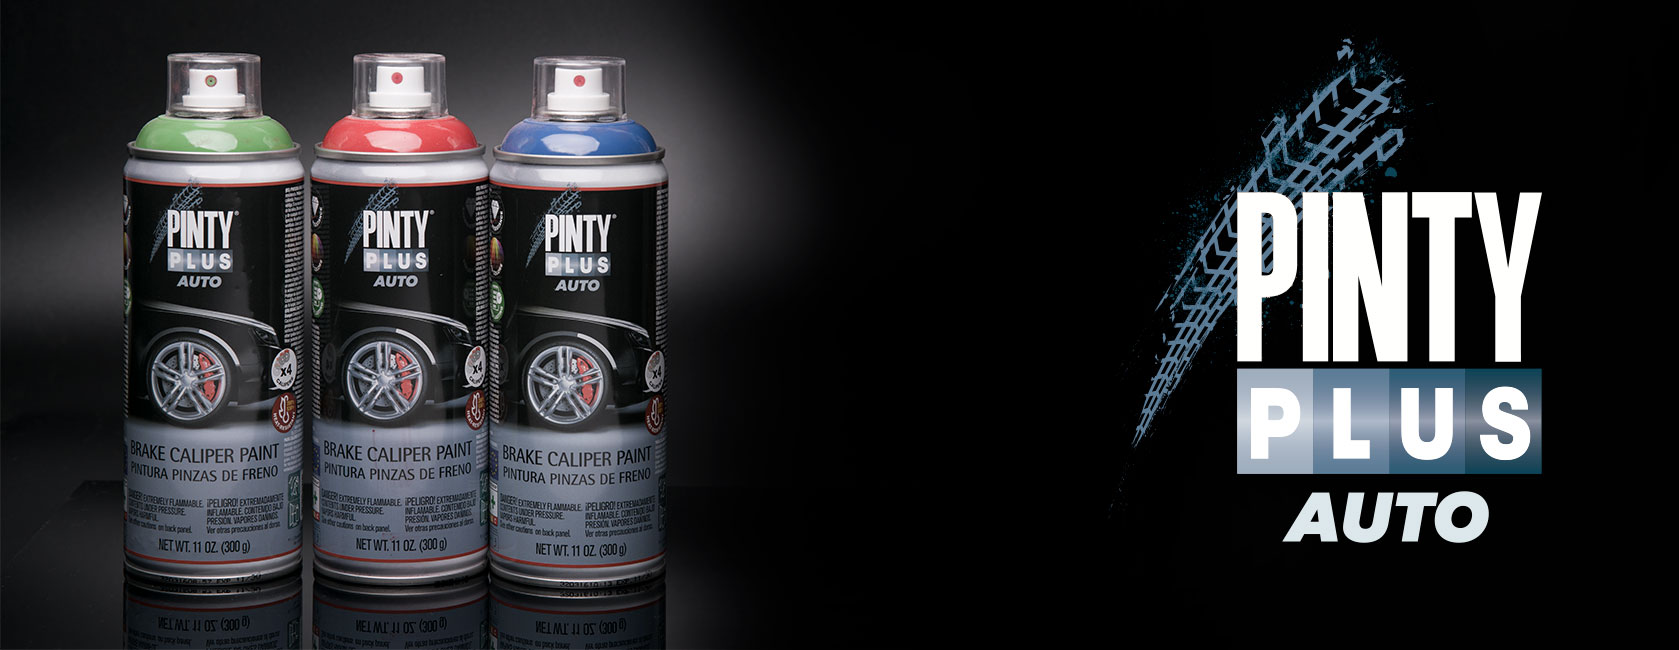 Pintyplus Auto pintura para frenos en spray